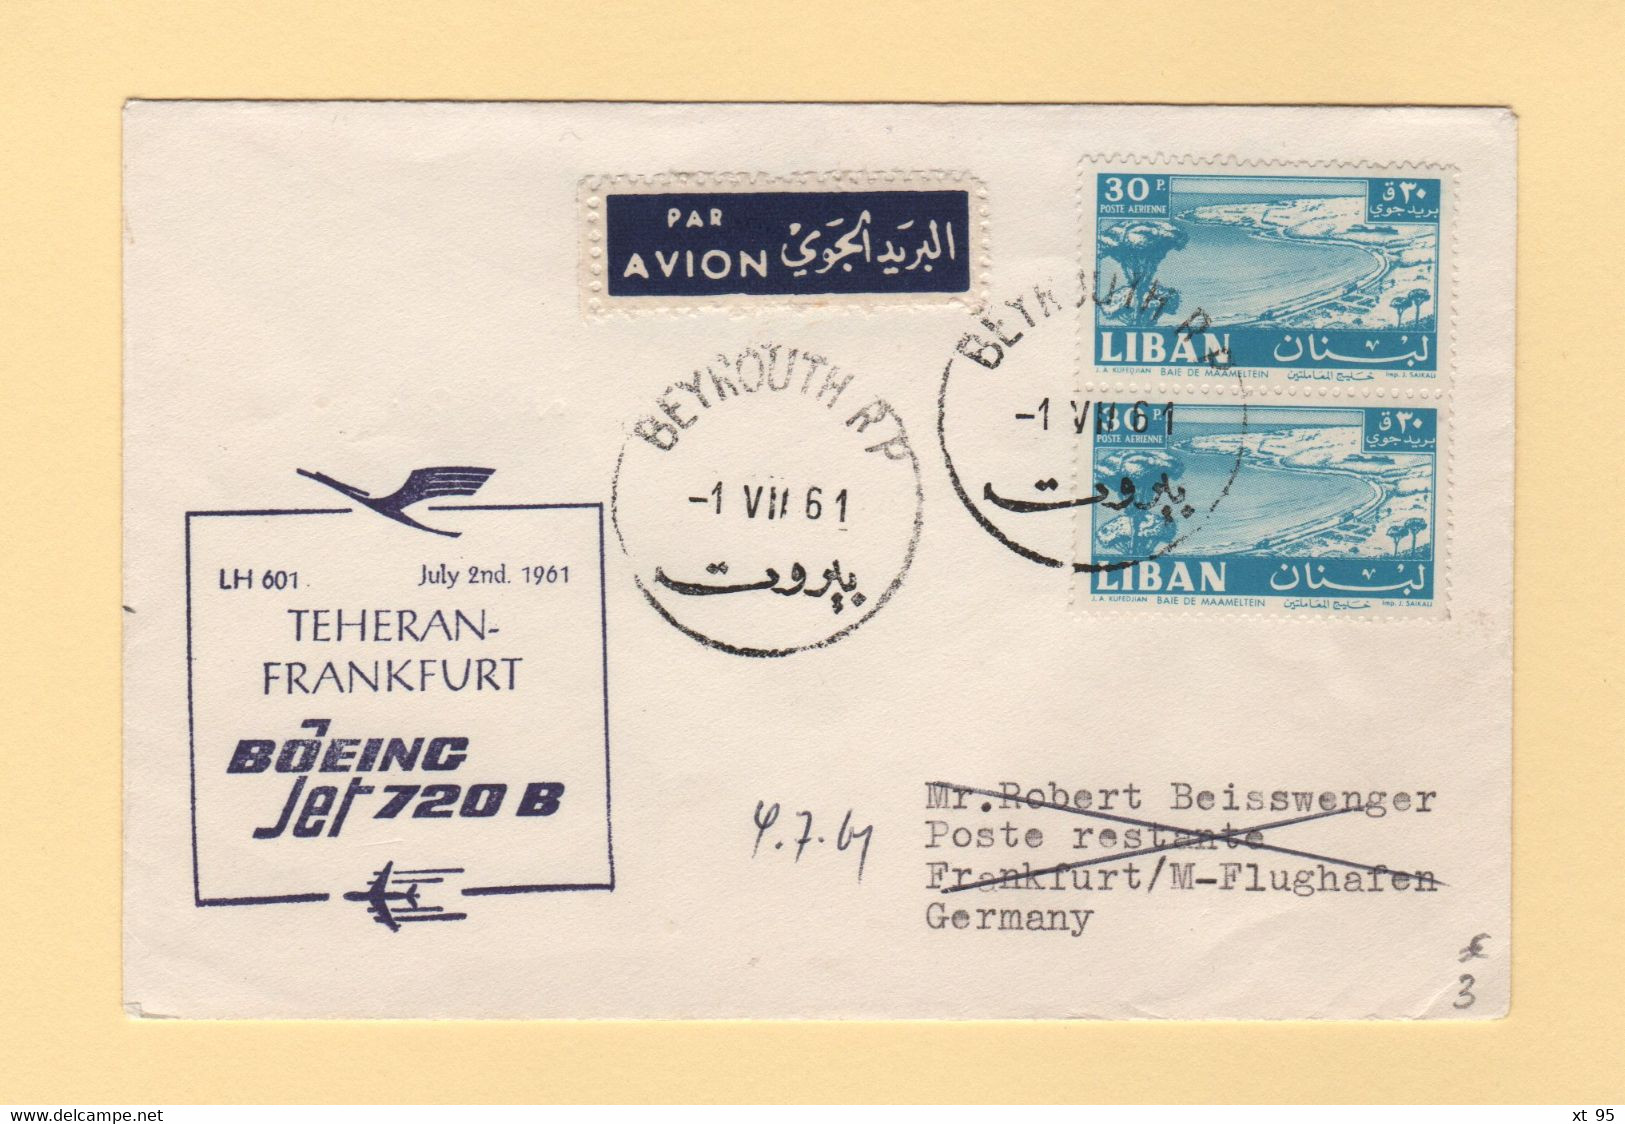 1er Vol - 1961 - Teheran Frankfurt - Boeing - Lebanon